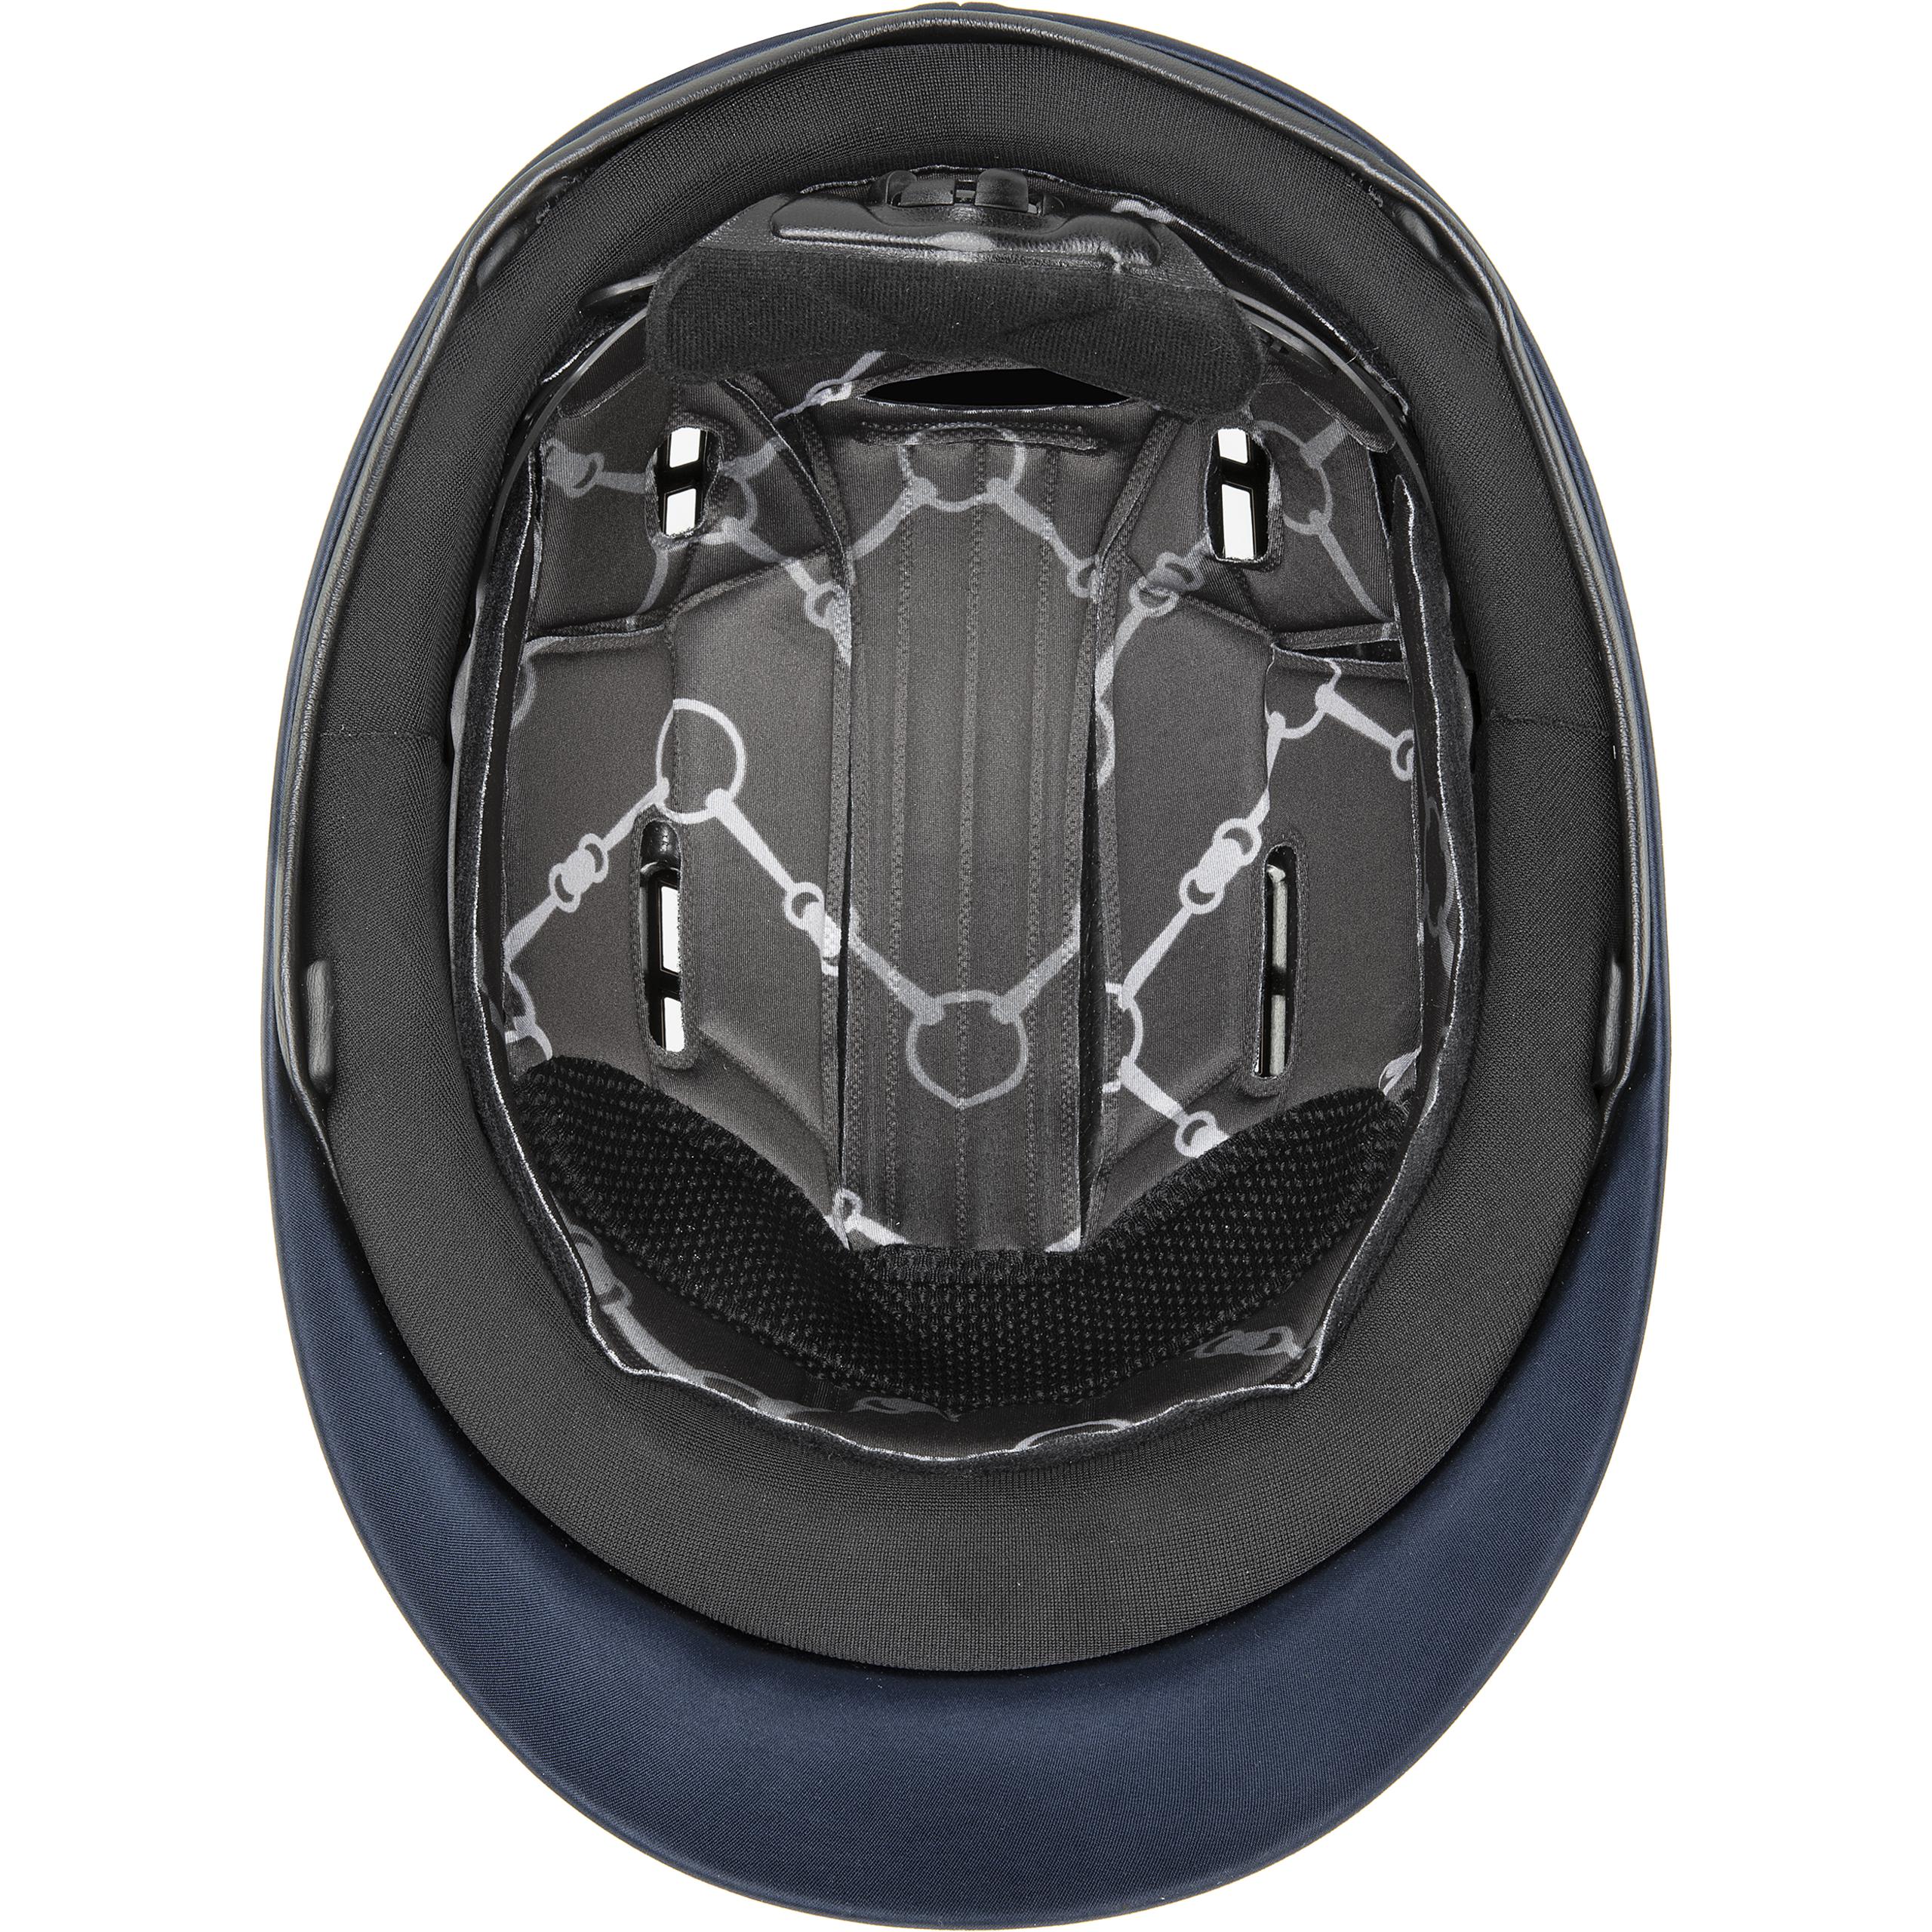 uvex suxxeed jewel navy-black | Riding helmets | uvex sports